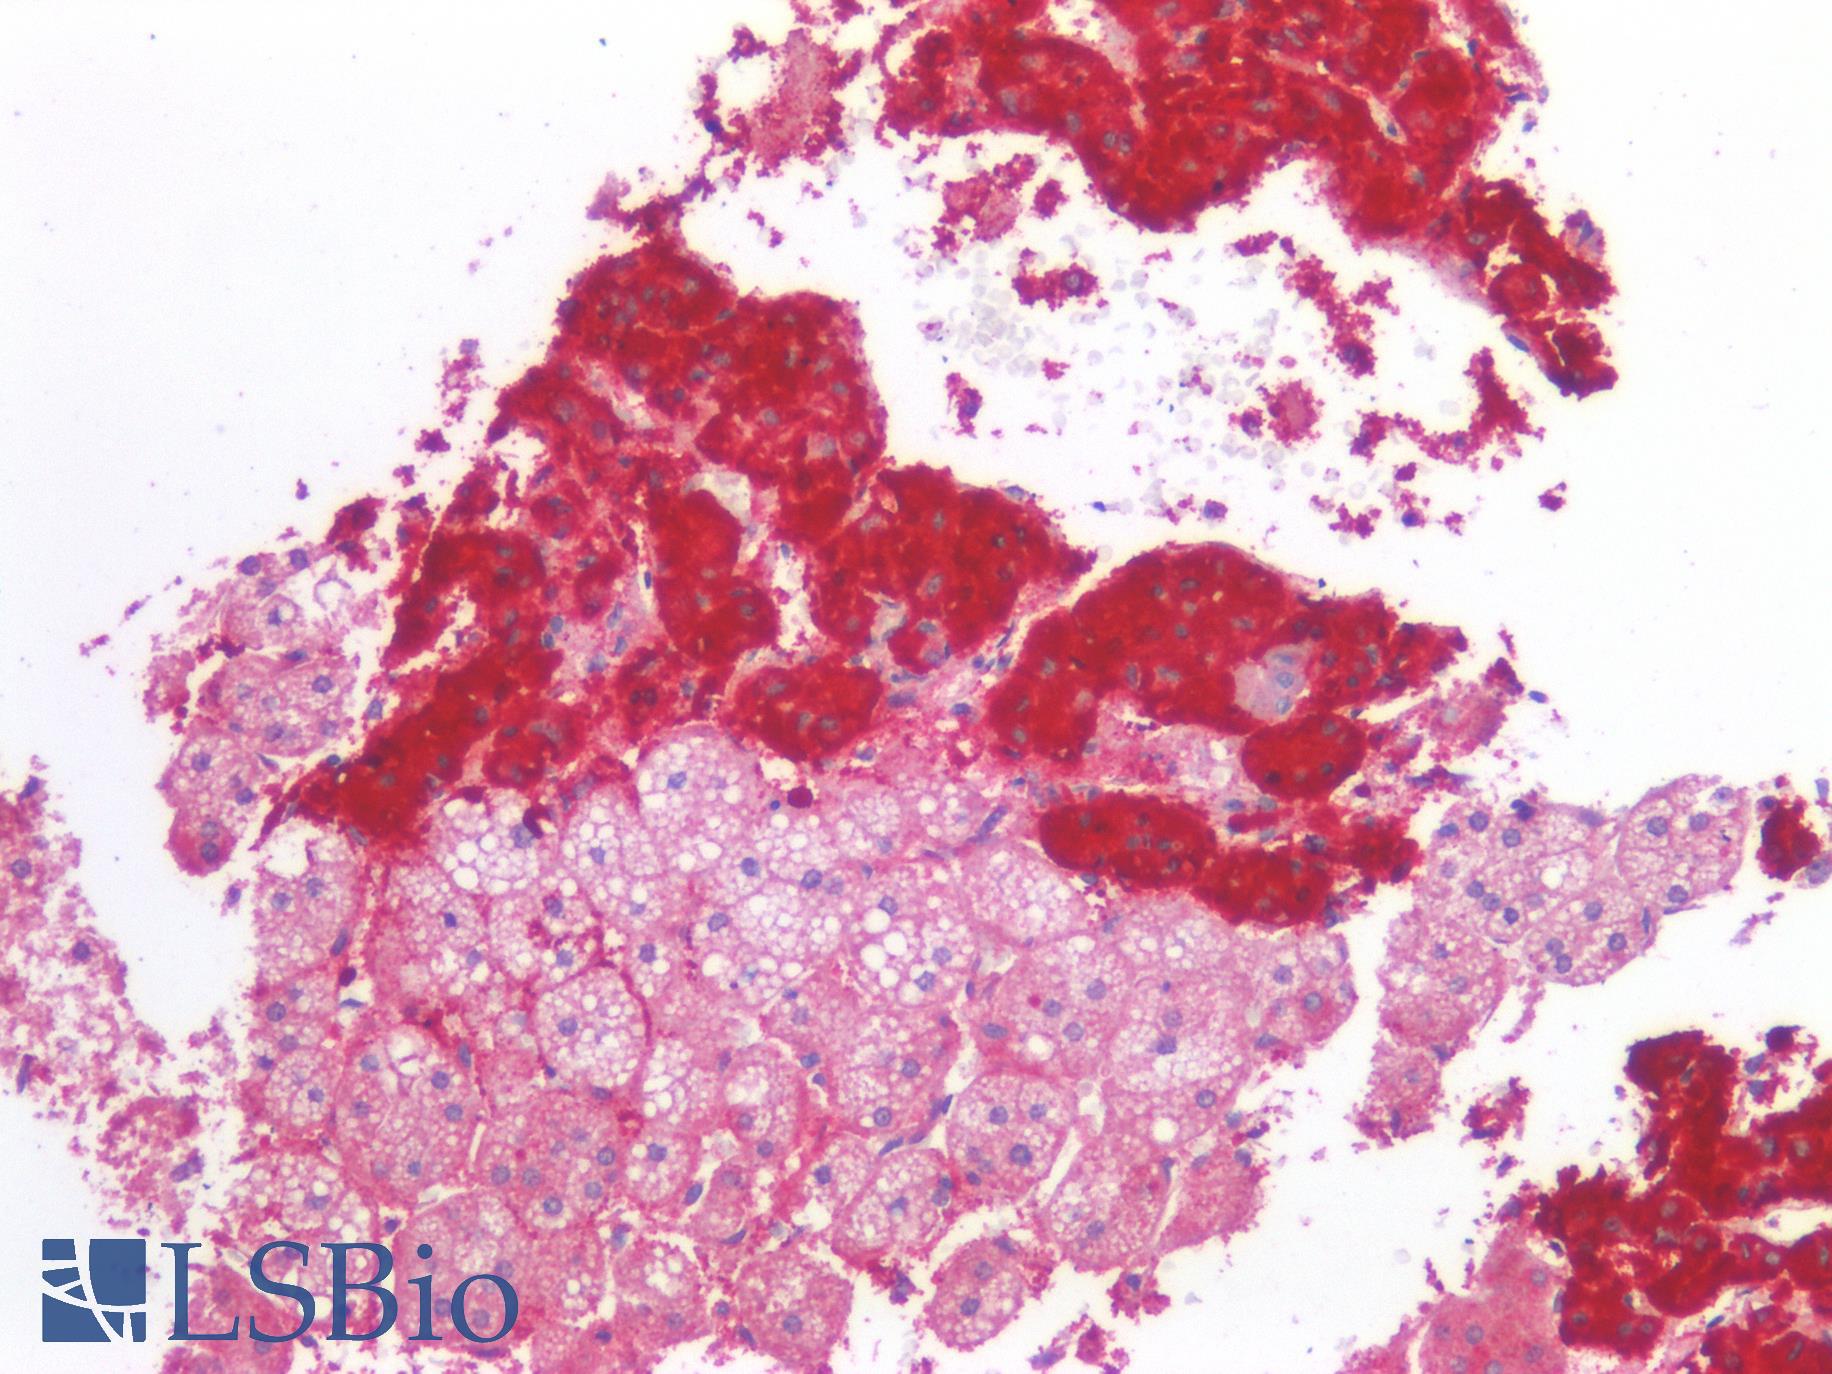 CD276 / B7-H3 Antibody - Human Adrenal: Formalin-Fixed, Paraffin-Embedded (FFPE)